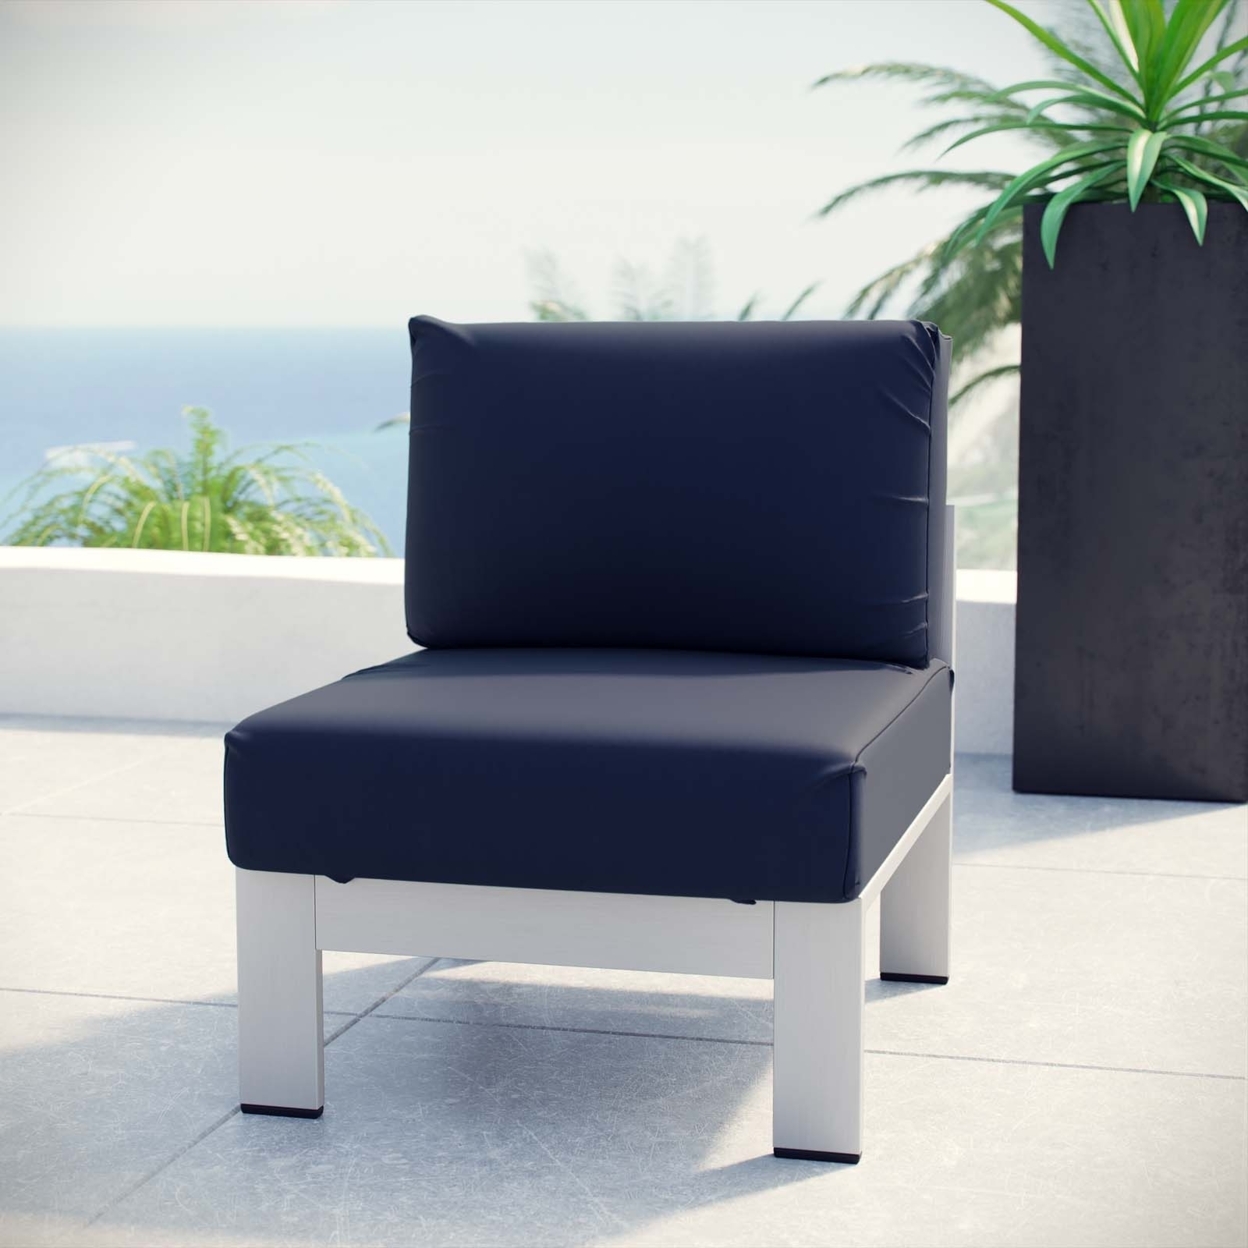 Silver Navy Shore Armless Outdoor Patio Aluminum Chair - image 4 of 4